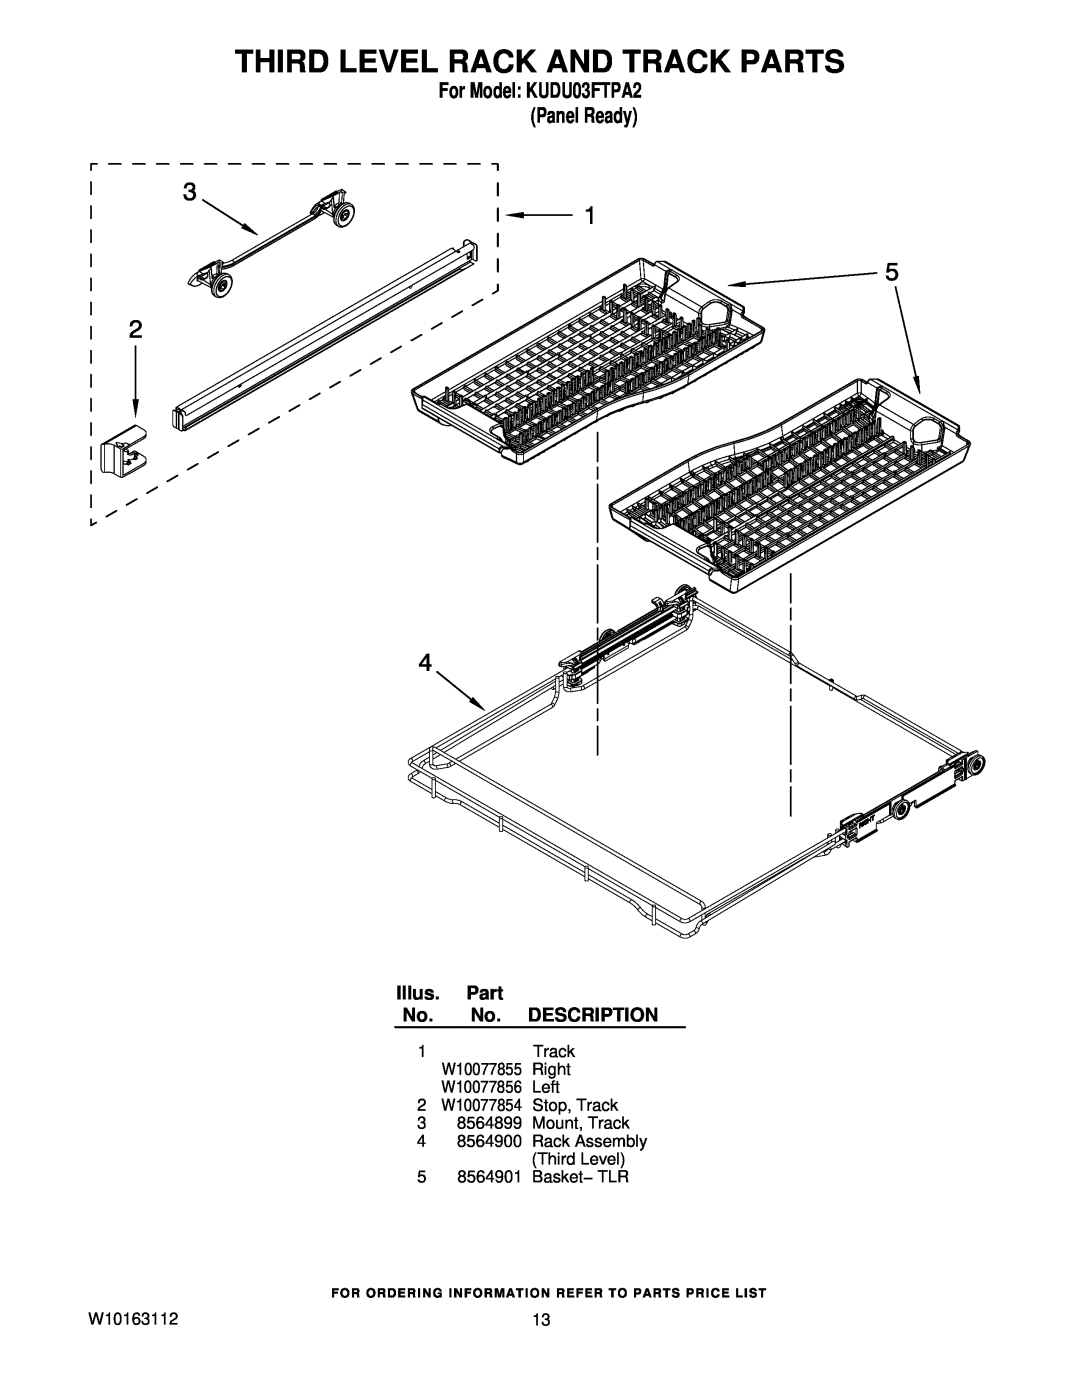 KitchenAid manual Third Level Rack And Track Parts, For Model KUDU03FTPA2 Panel Ready, Illus. Part No. No. DESCRIPTION 